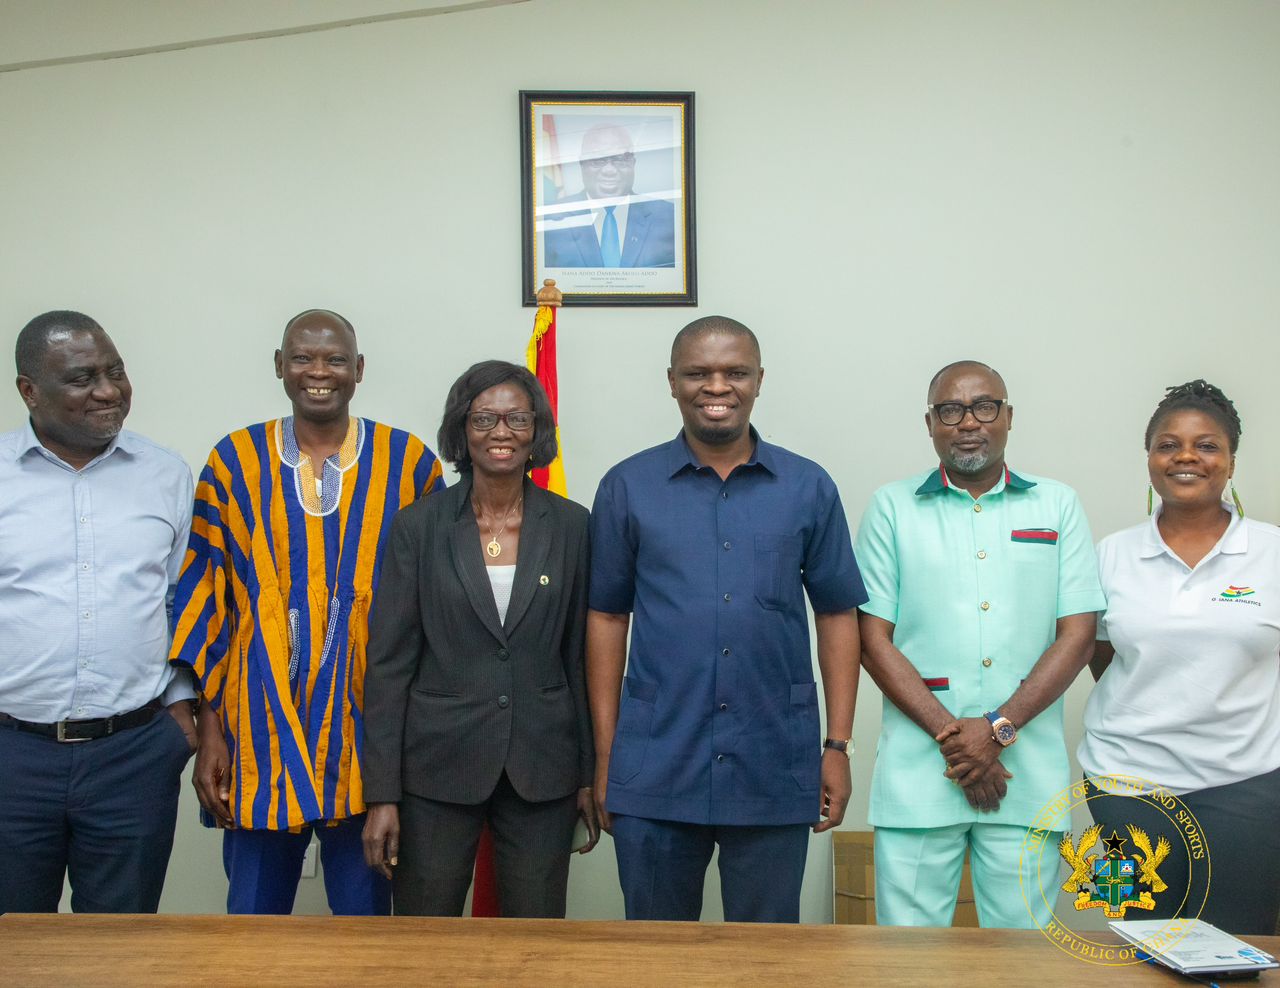 Ghana Athletics earns plaudits for innovative family meeting initiative